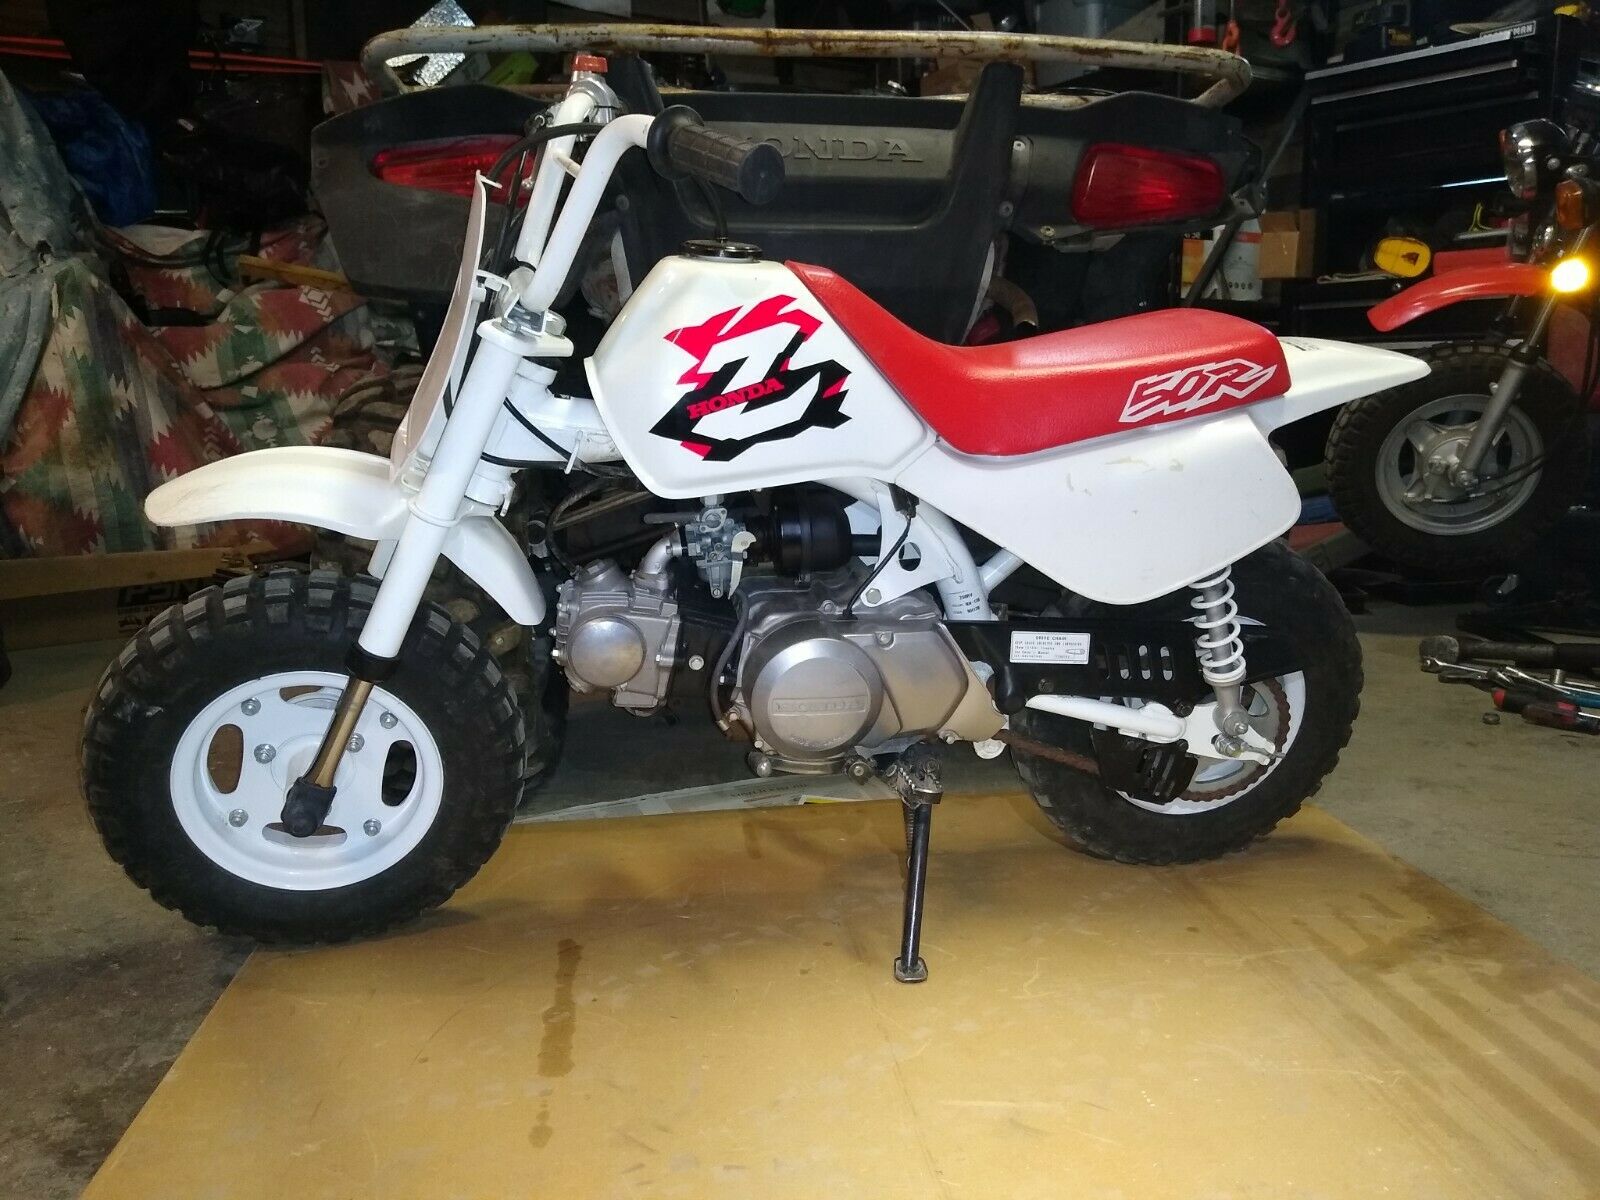 Z 50 R Motocross Monkey